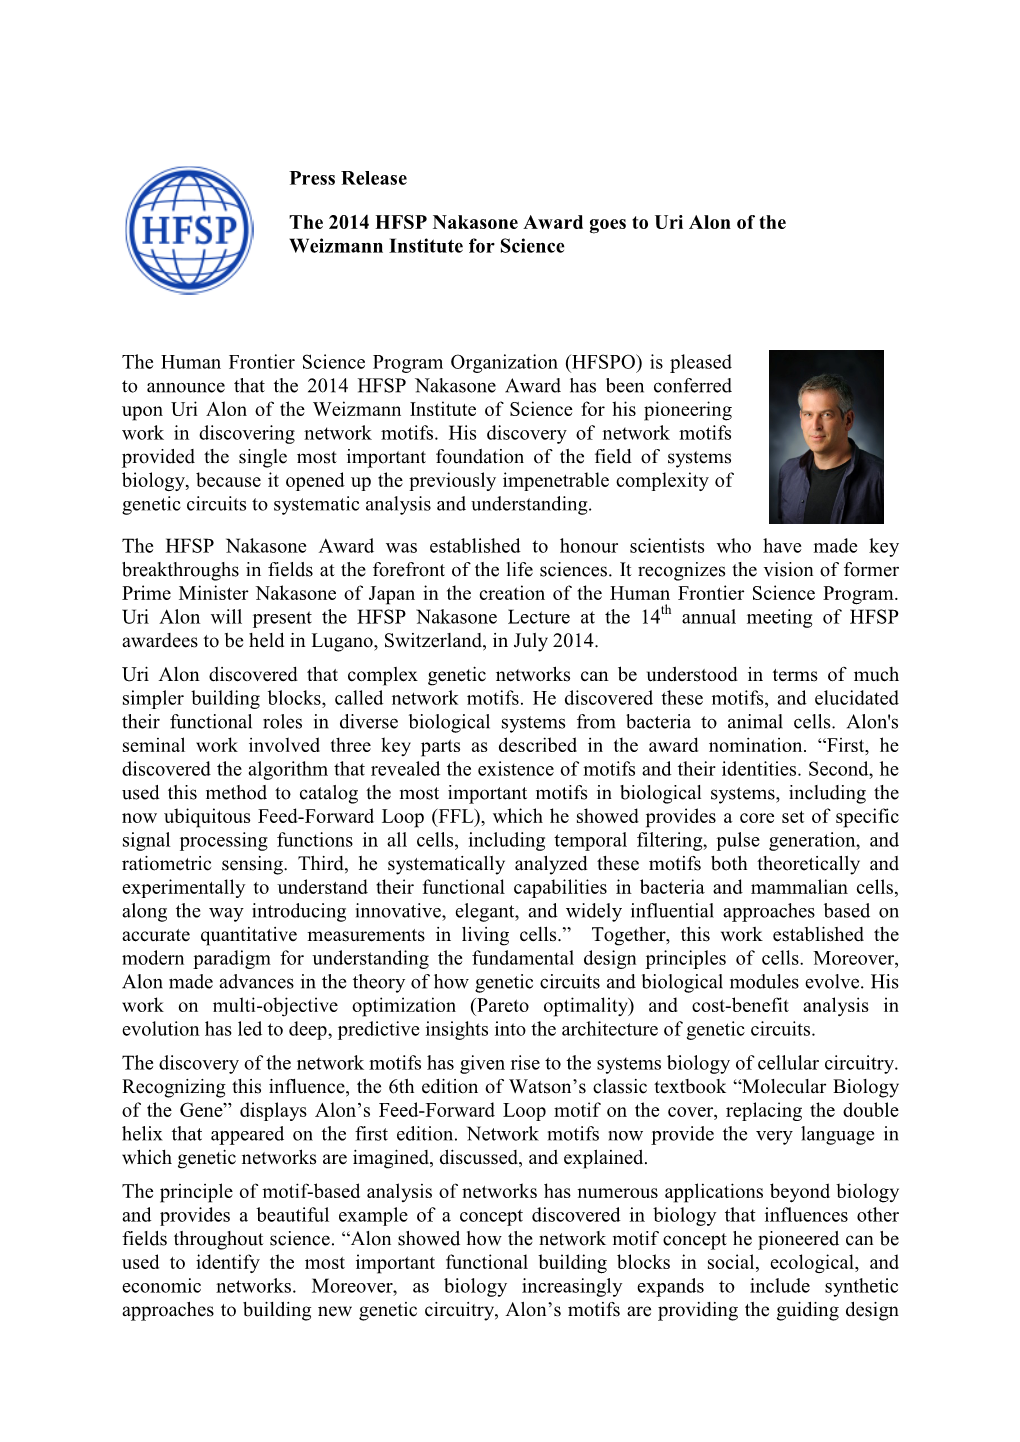 Press Release the 2014 HFSP Nakasone Award Goes to Uri Alon